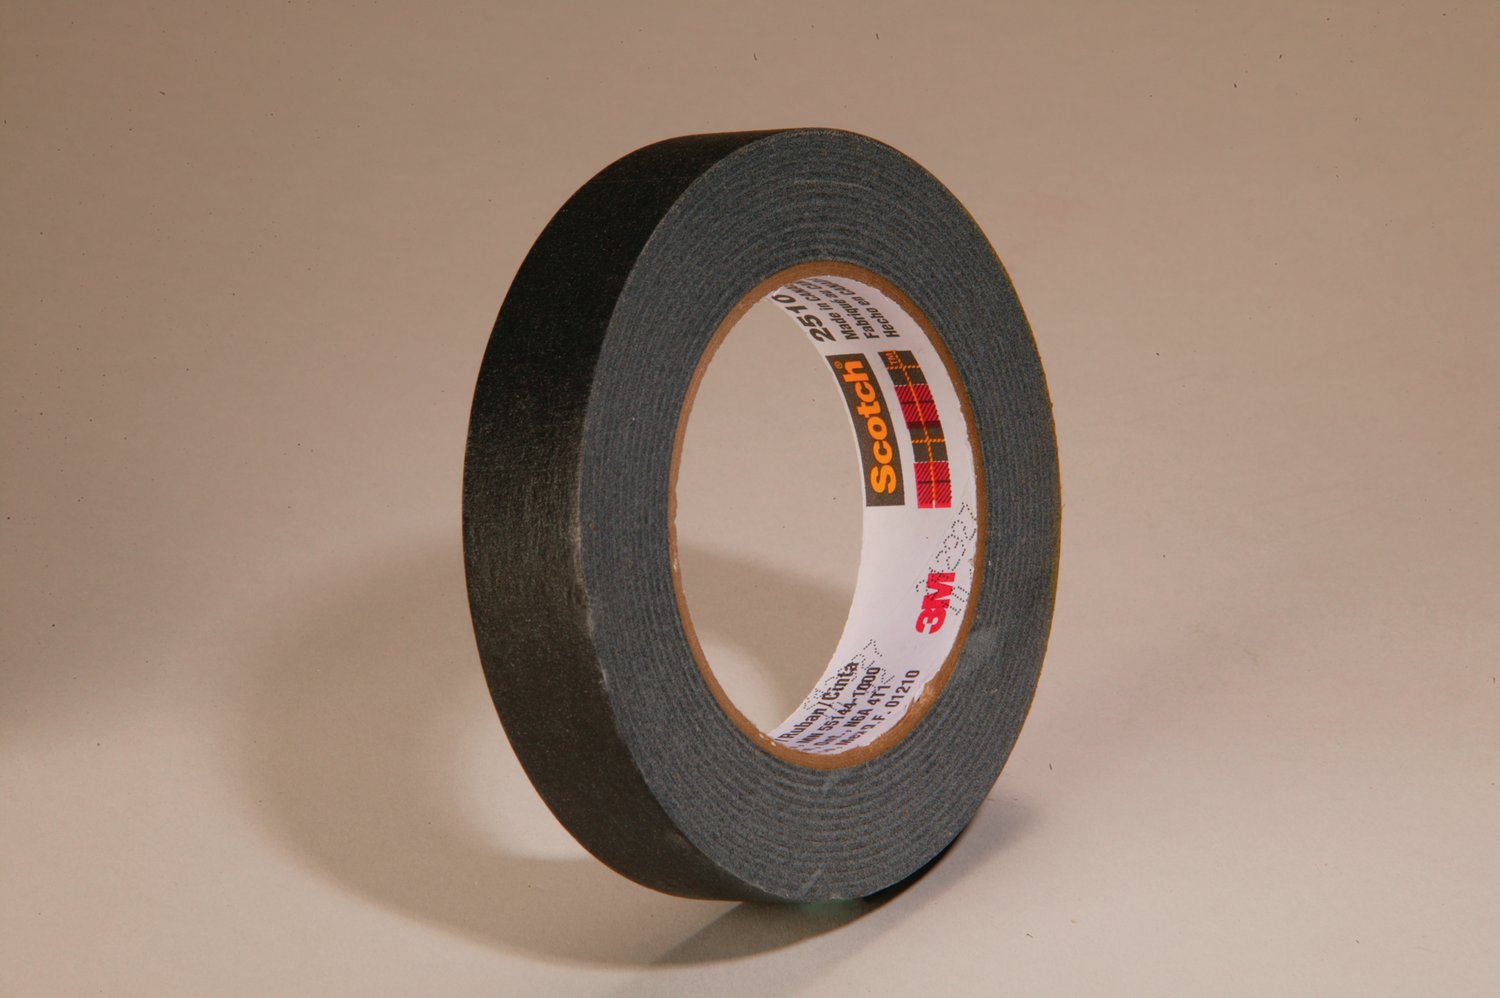 7000124004 - 3M Sealer Tape 2510, Black, 24 mm x 55 m, 5.6 mil, 36 Roll/Case